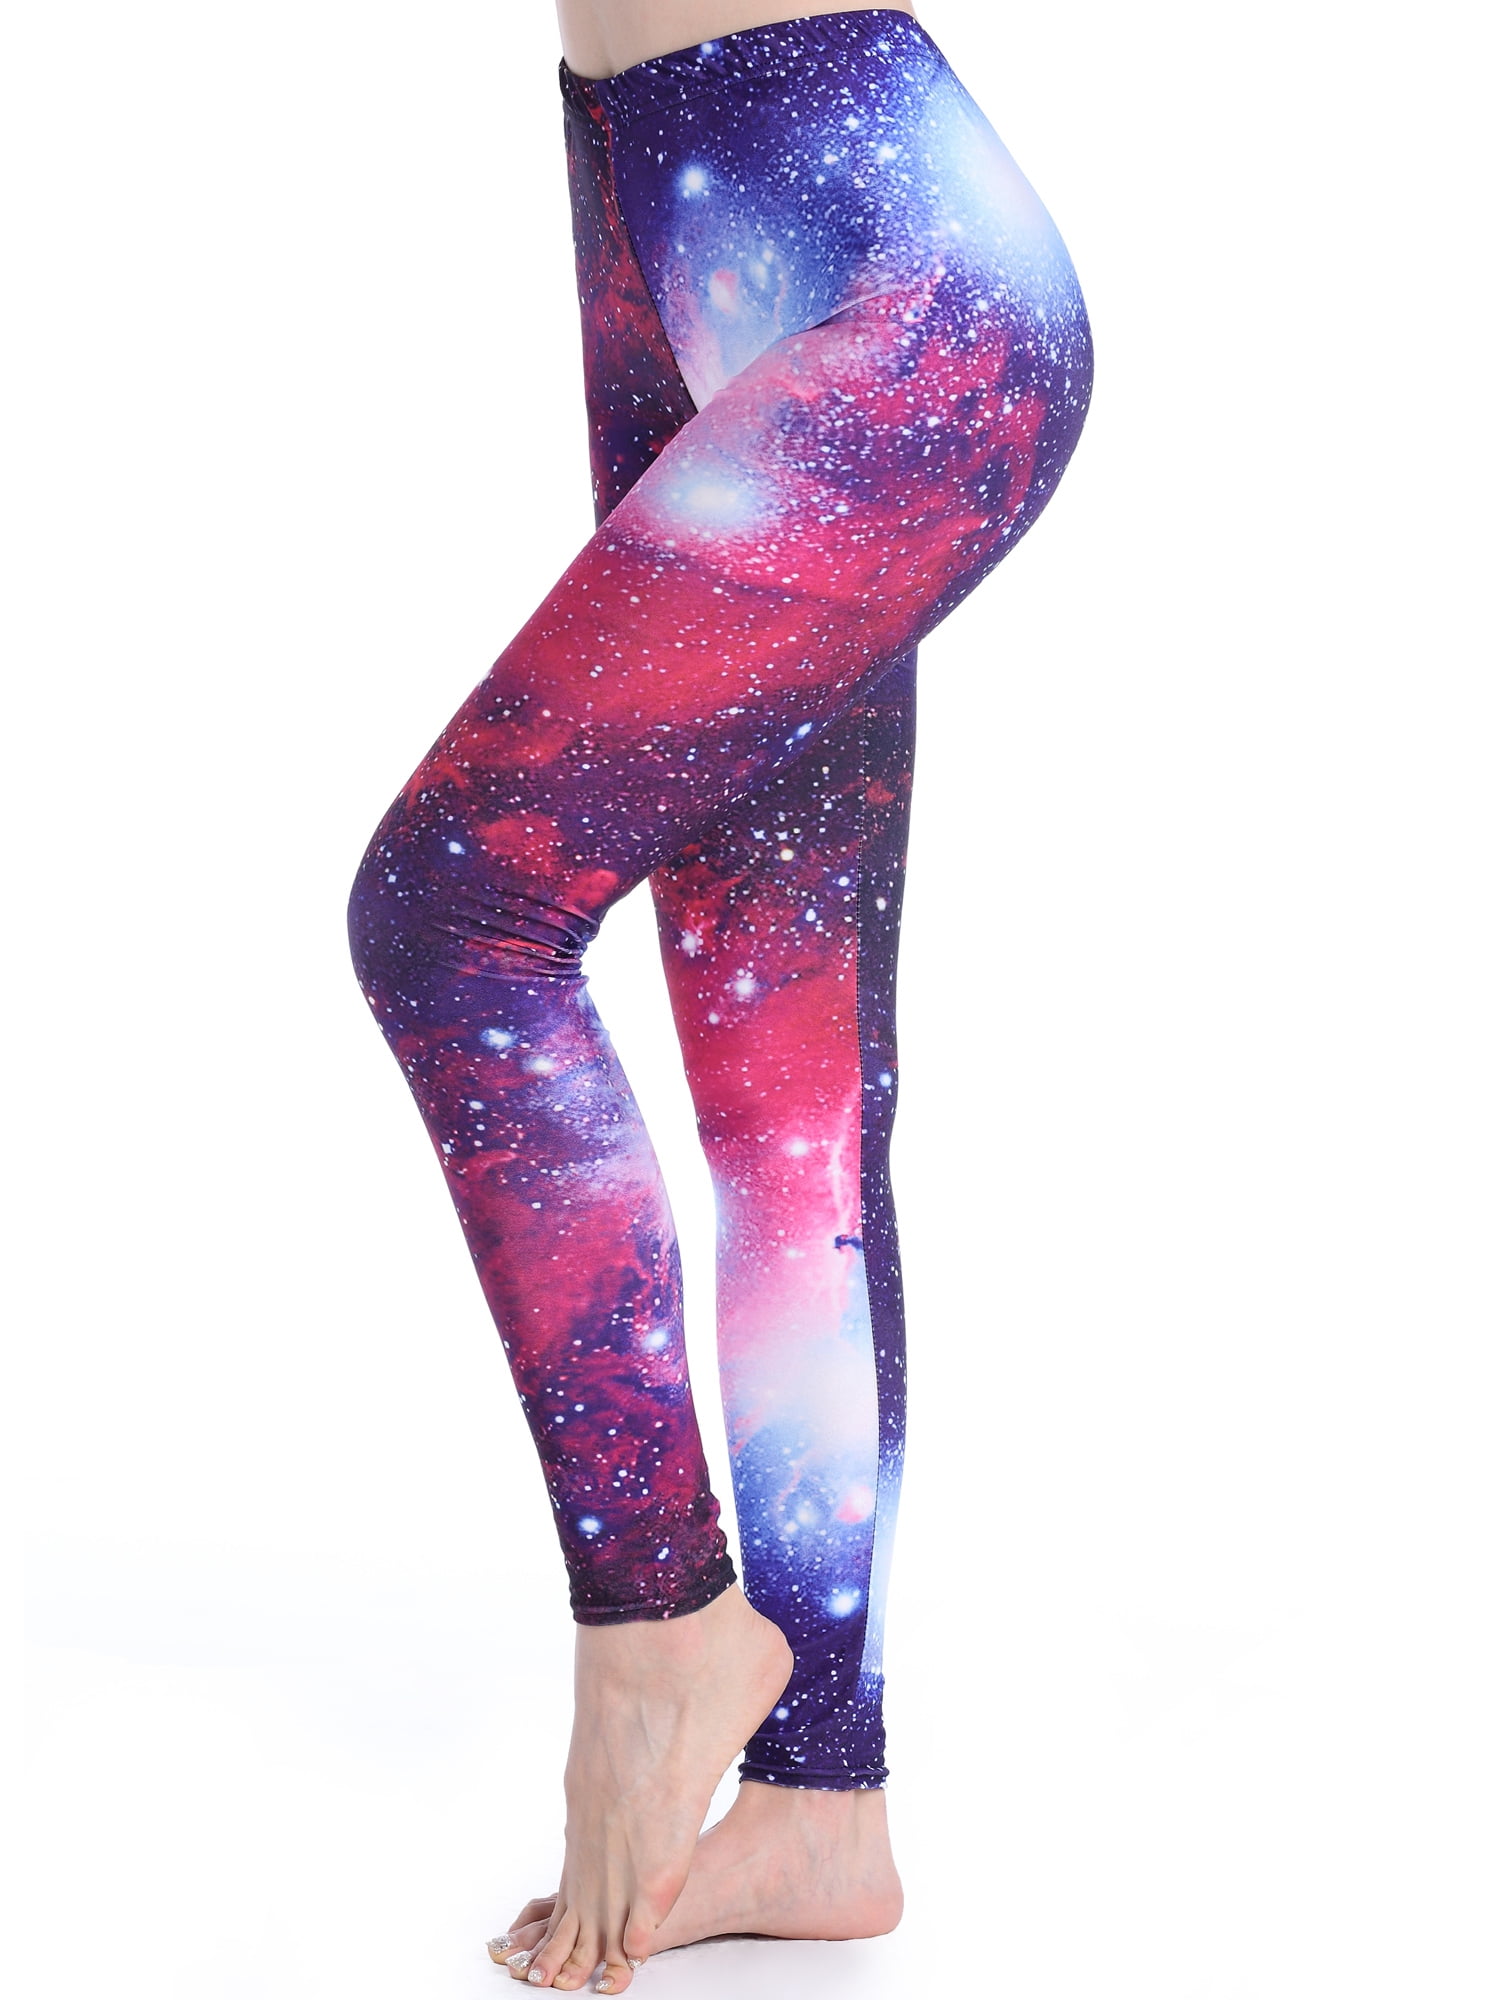 KOS USA Cropped Leggings Yoga Pants Abstract Galaxy Print Workout Athletic  Gym | eBay